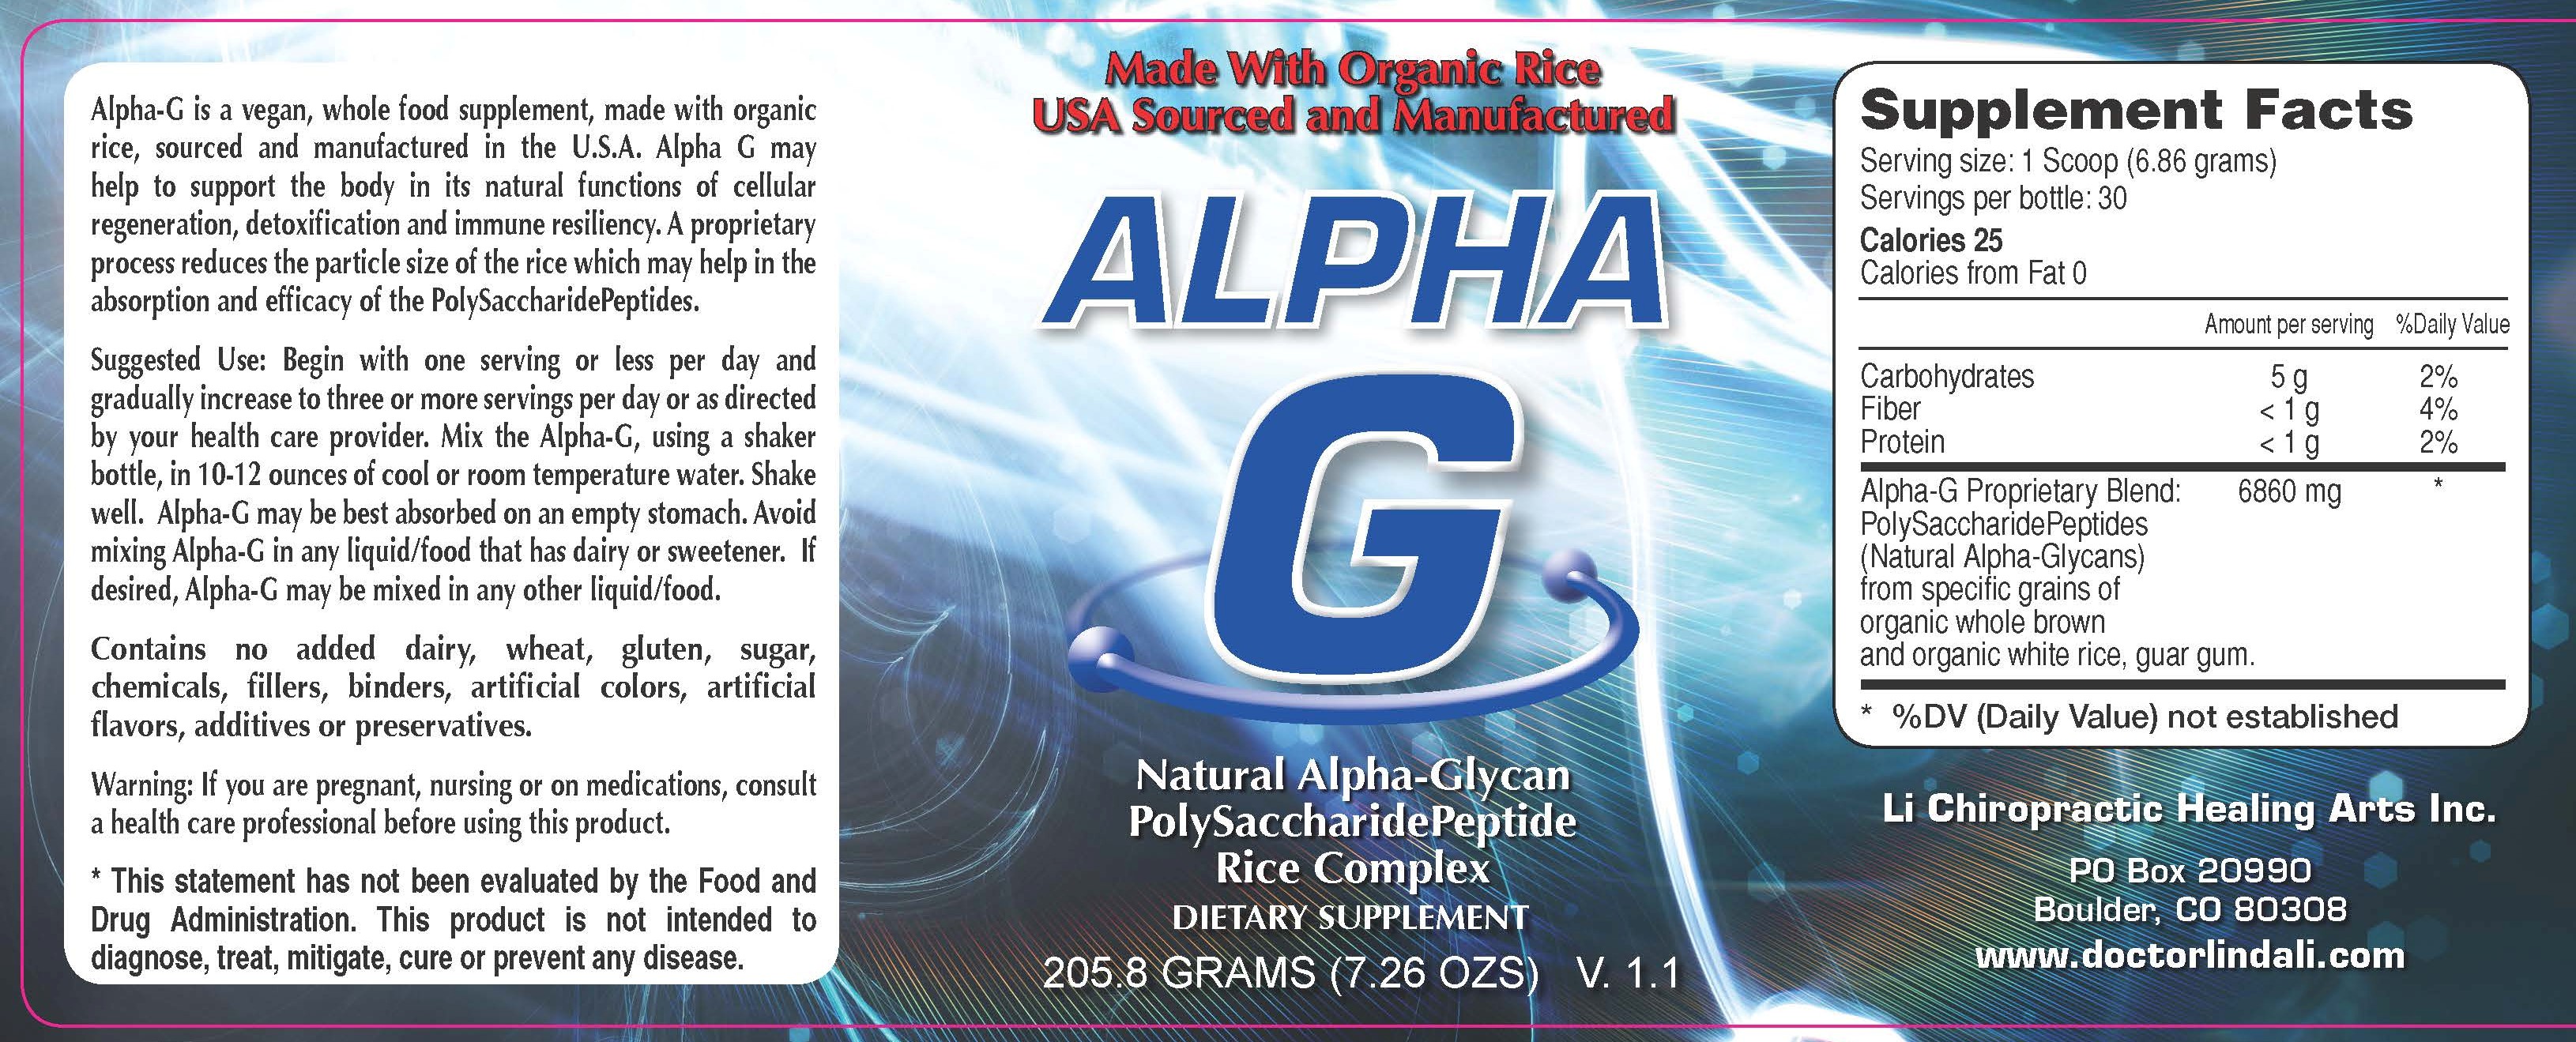 ALPHA-G label_Supplement Facts